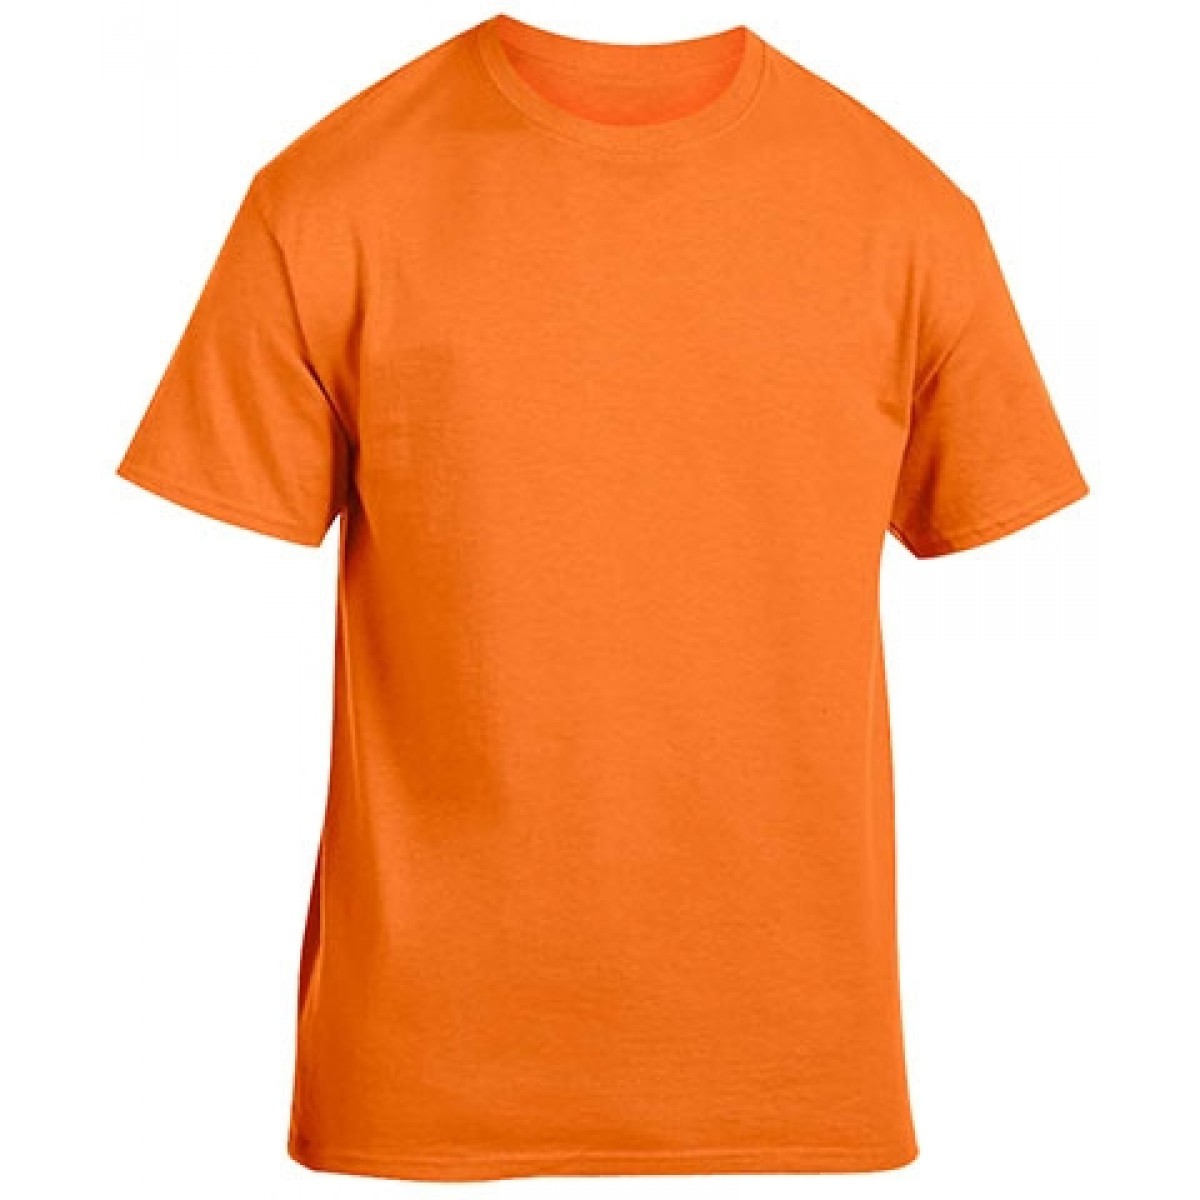 Cotton Short Sleeve T-Shirt Safety Orange-S